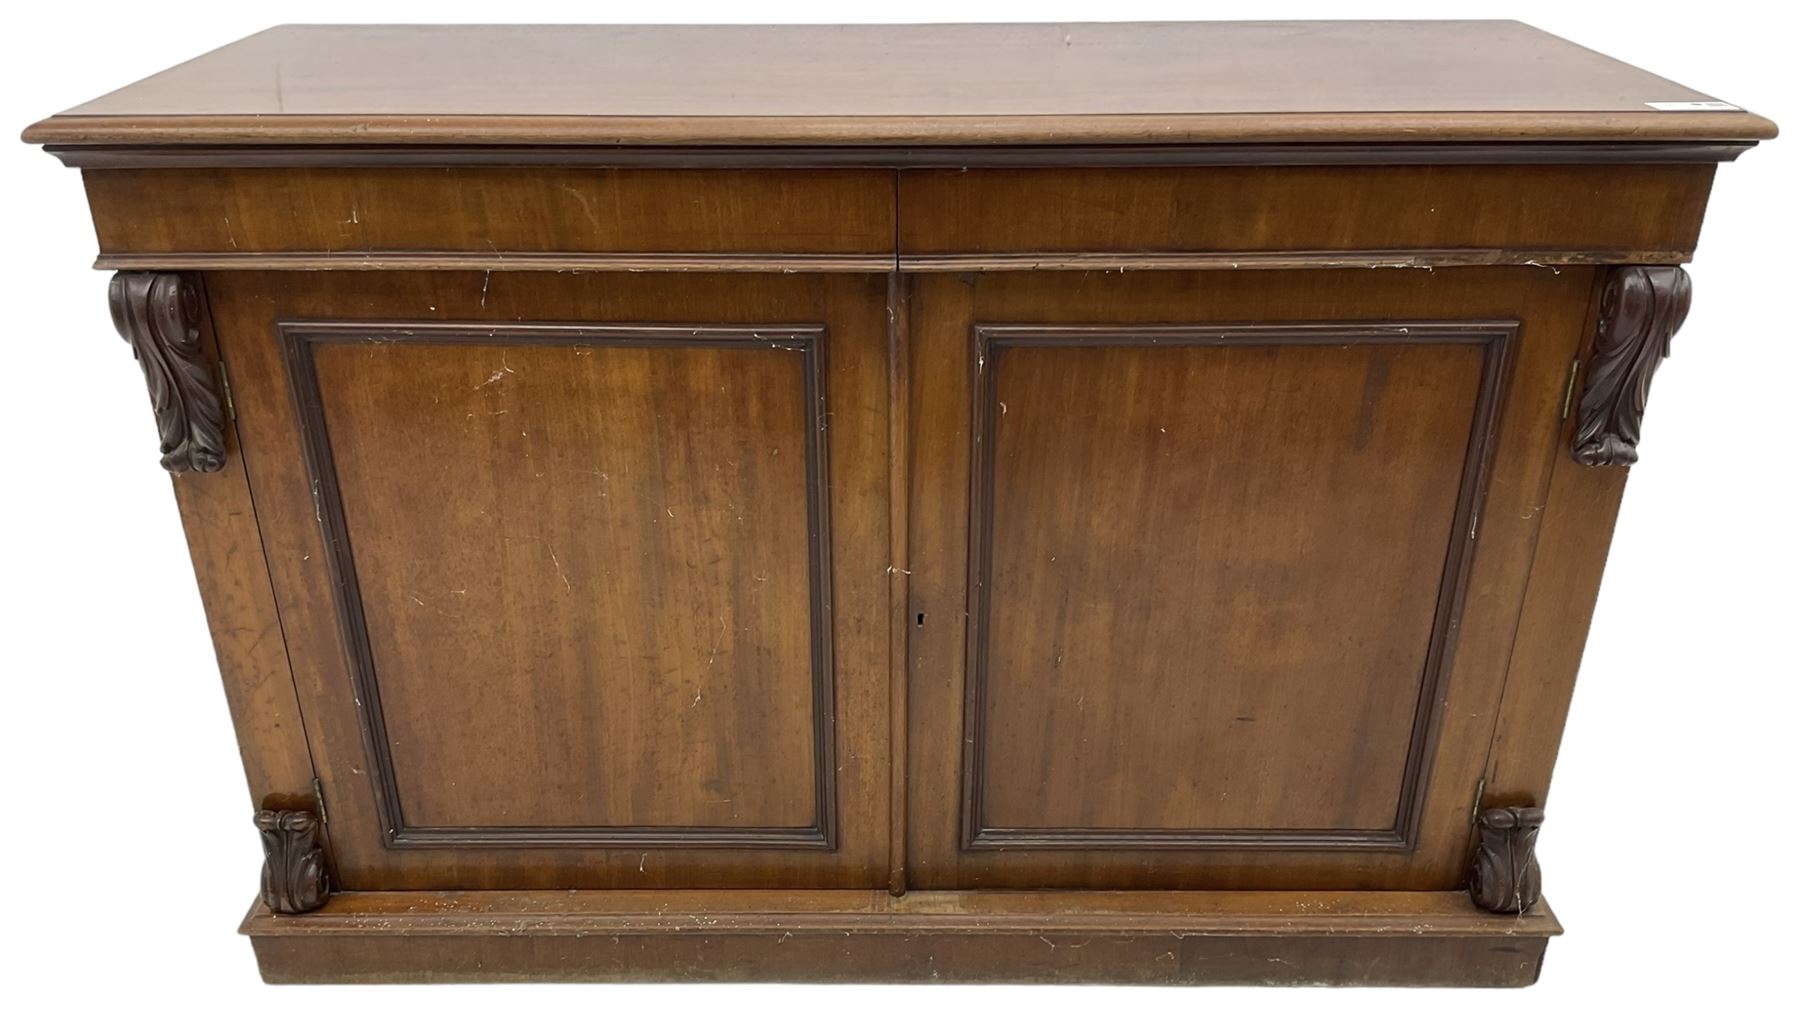 Early 19th century mahogany chiffonier sideboard - Image 2 of 9